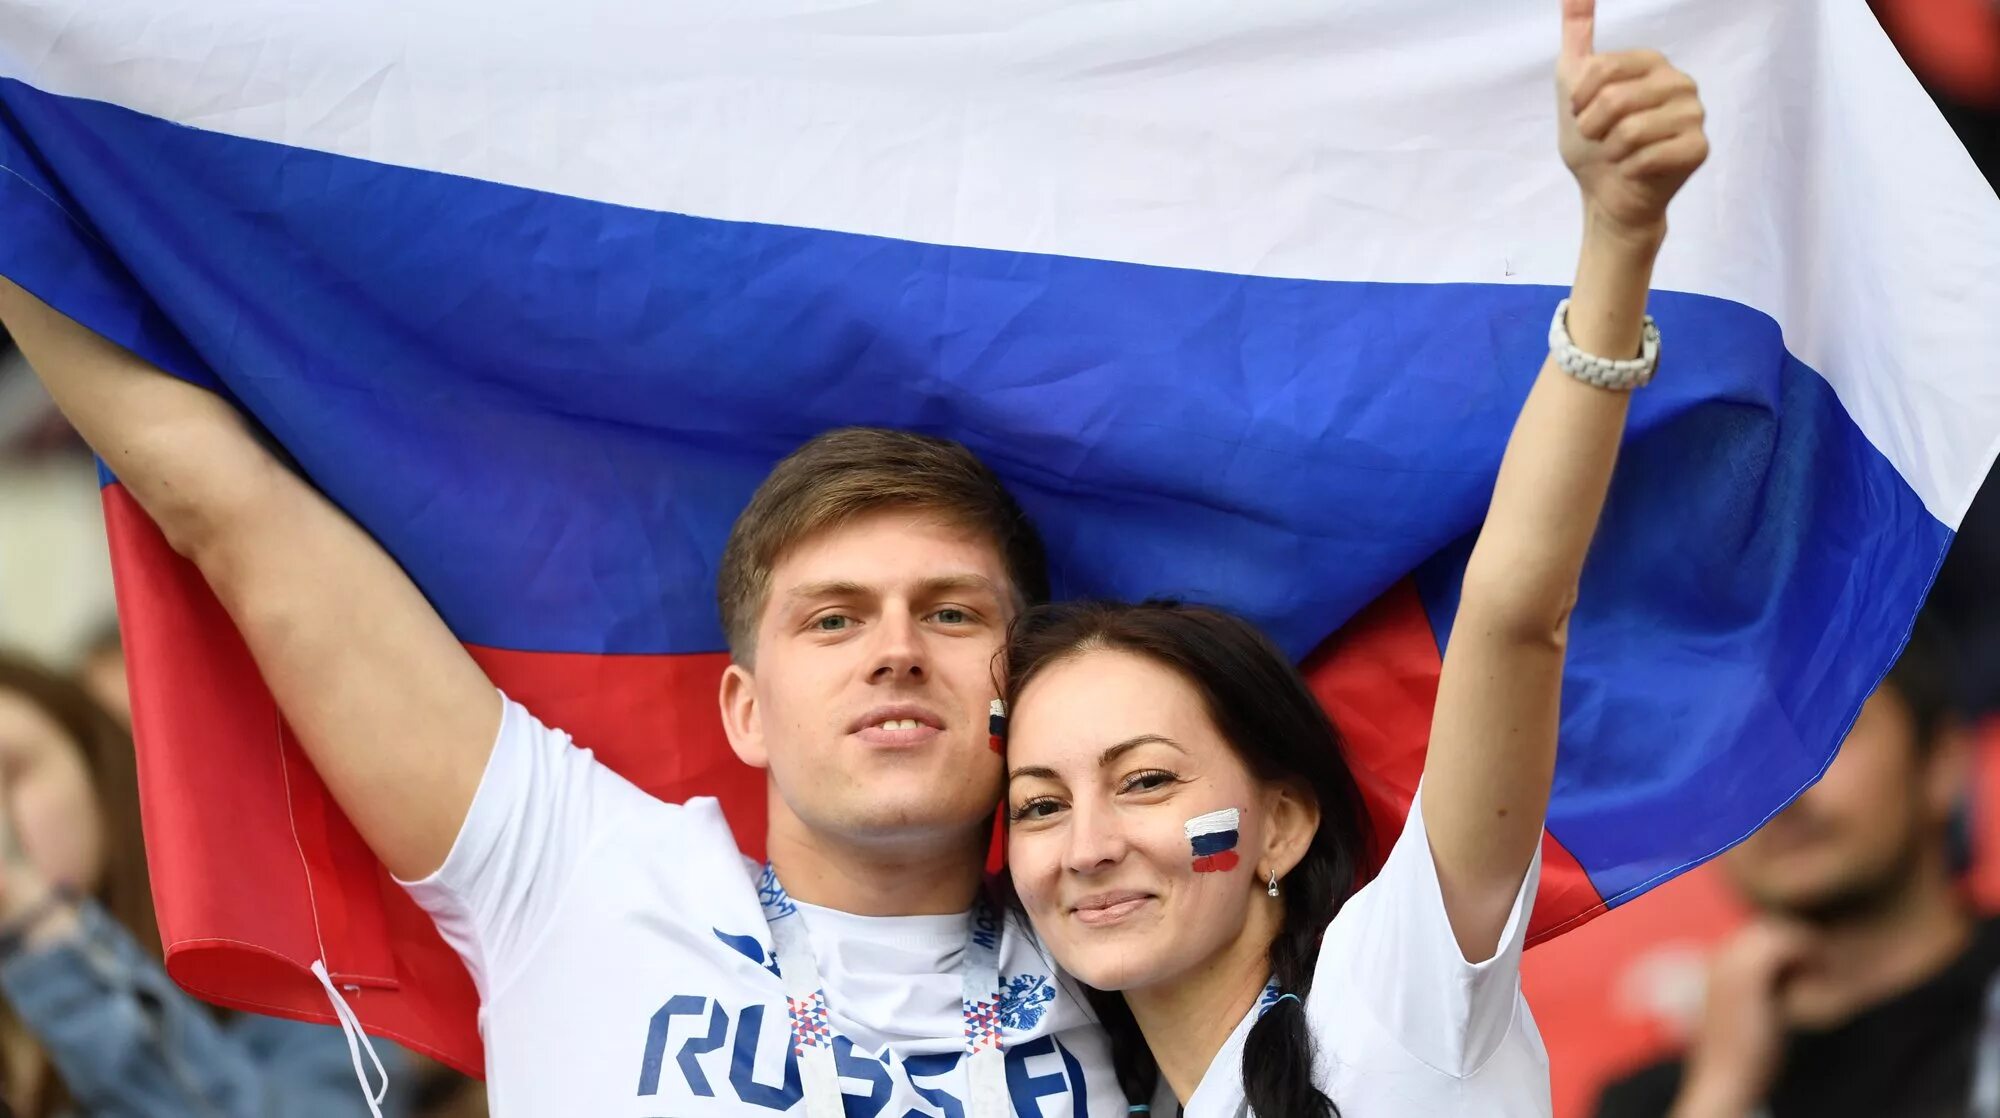 12 июня мужчина. Молодежь с российским флагом. Люди с российским флагом. Парень с флагом России. Россия человек.